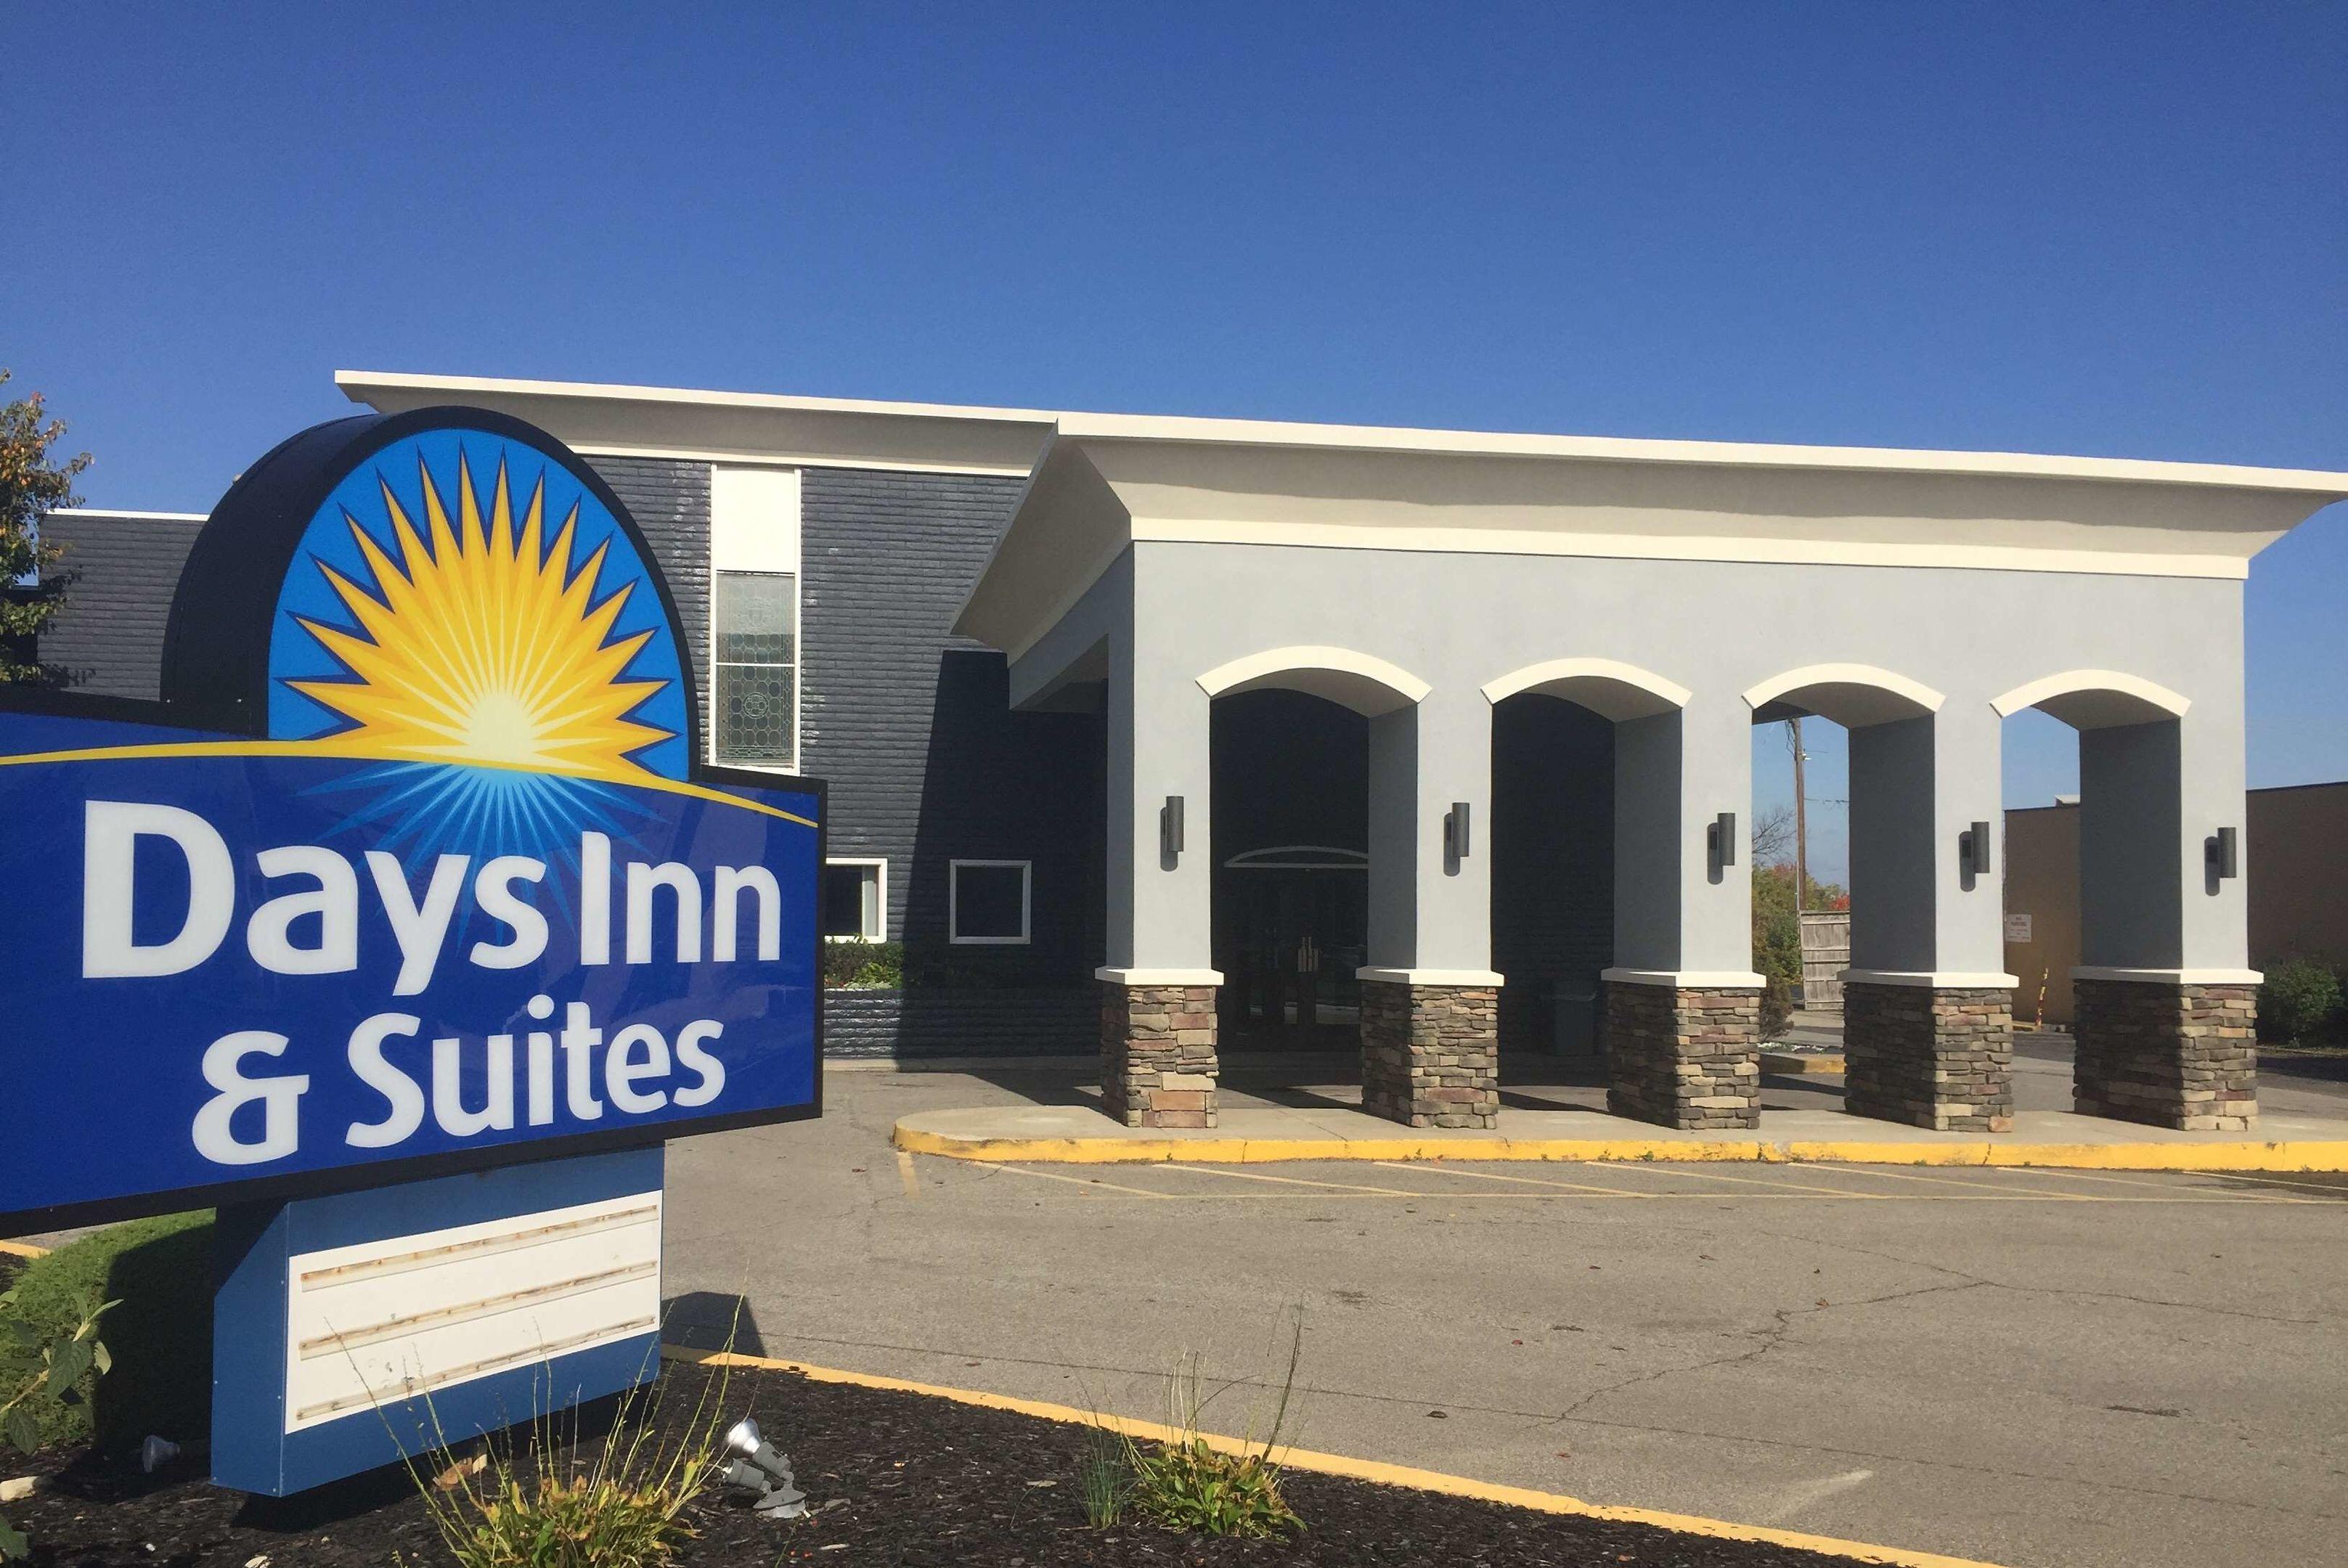 Days Inn & Suites Cincinnati North